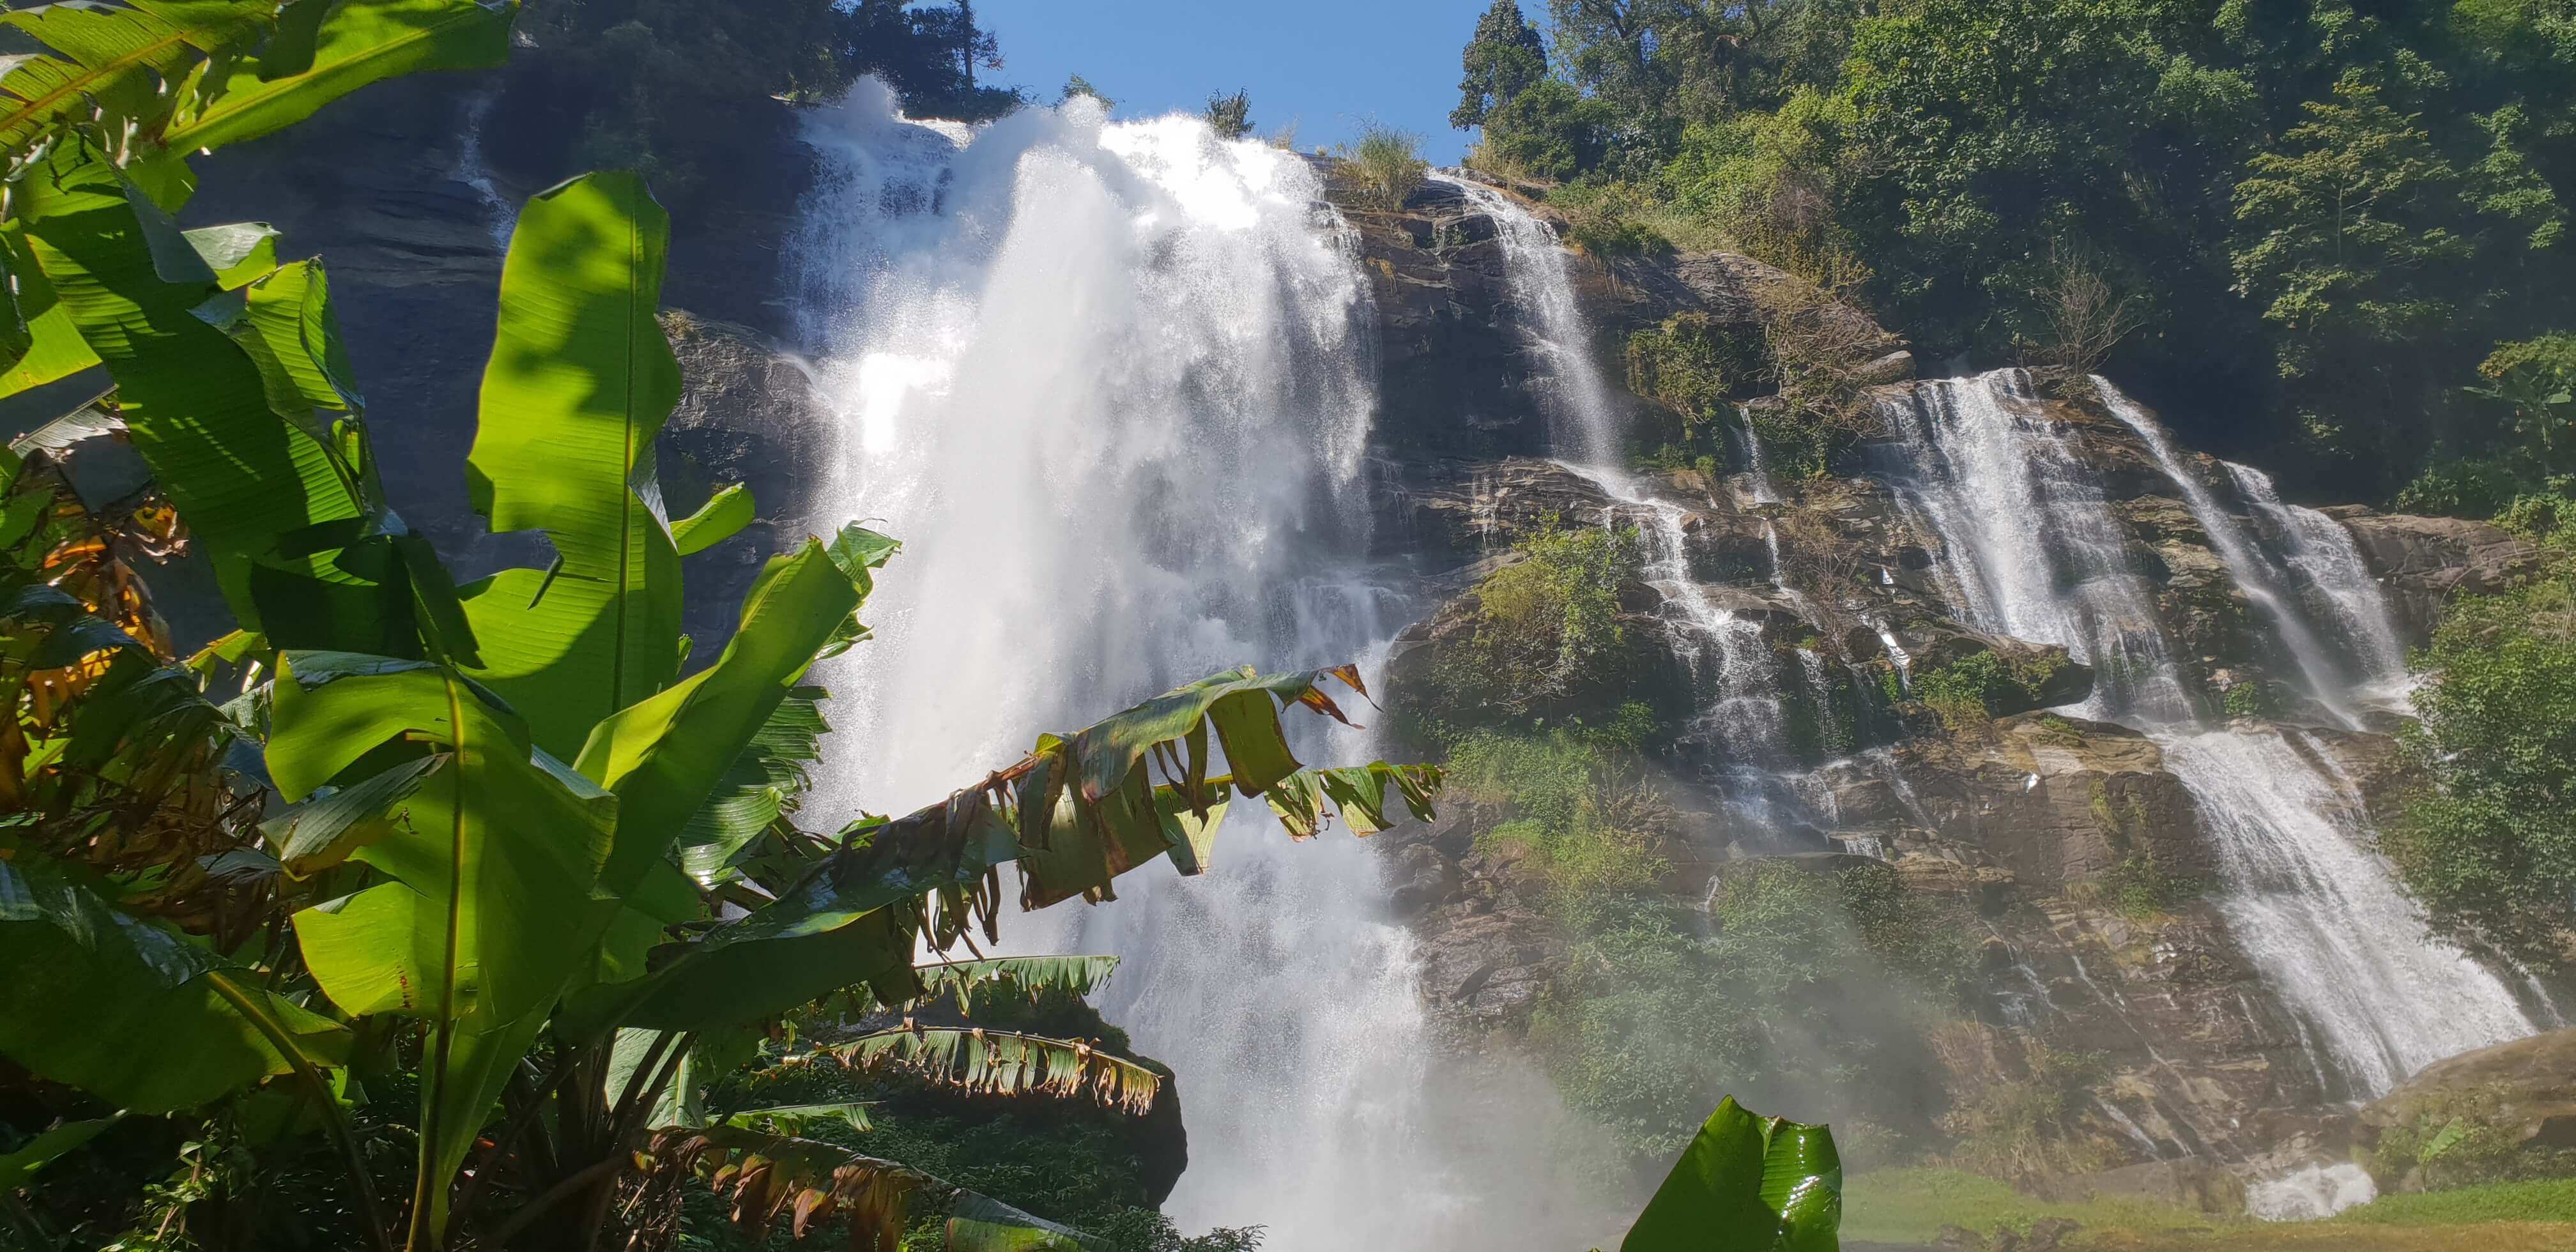 The stunning Wachirathan waterfall